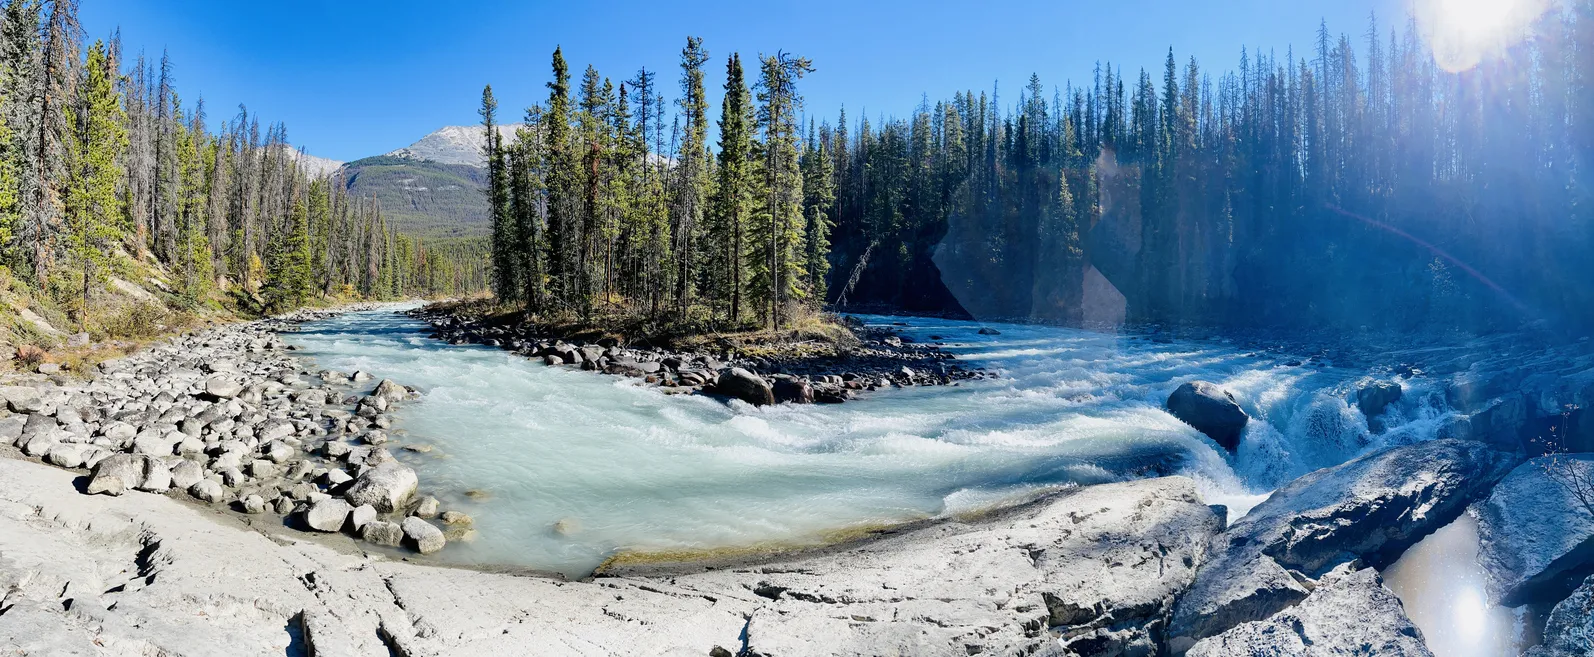 La rivière Sunwapta dans le parc national de Banff, province de l'Alberta, Canada  © iStock / ajansen